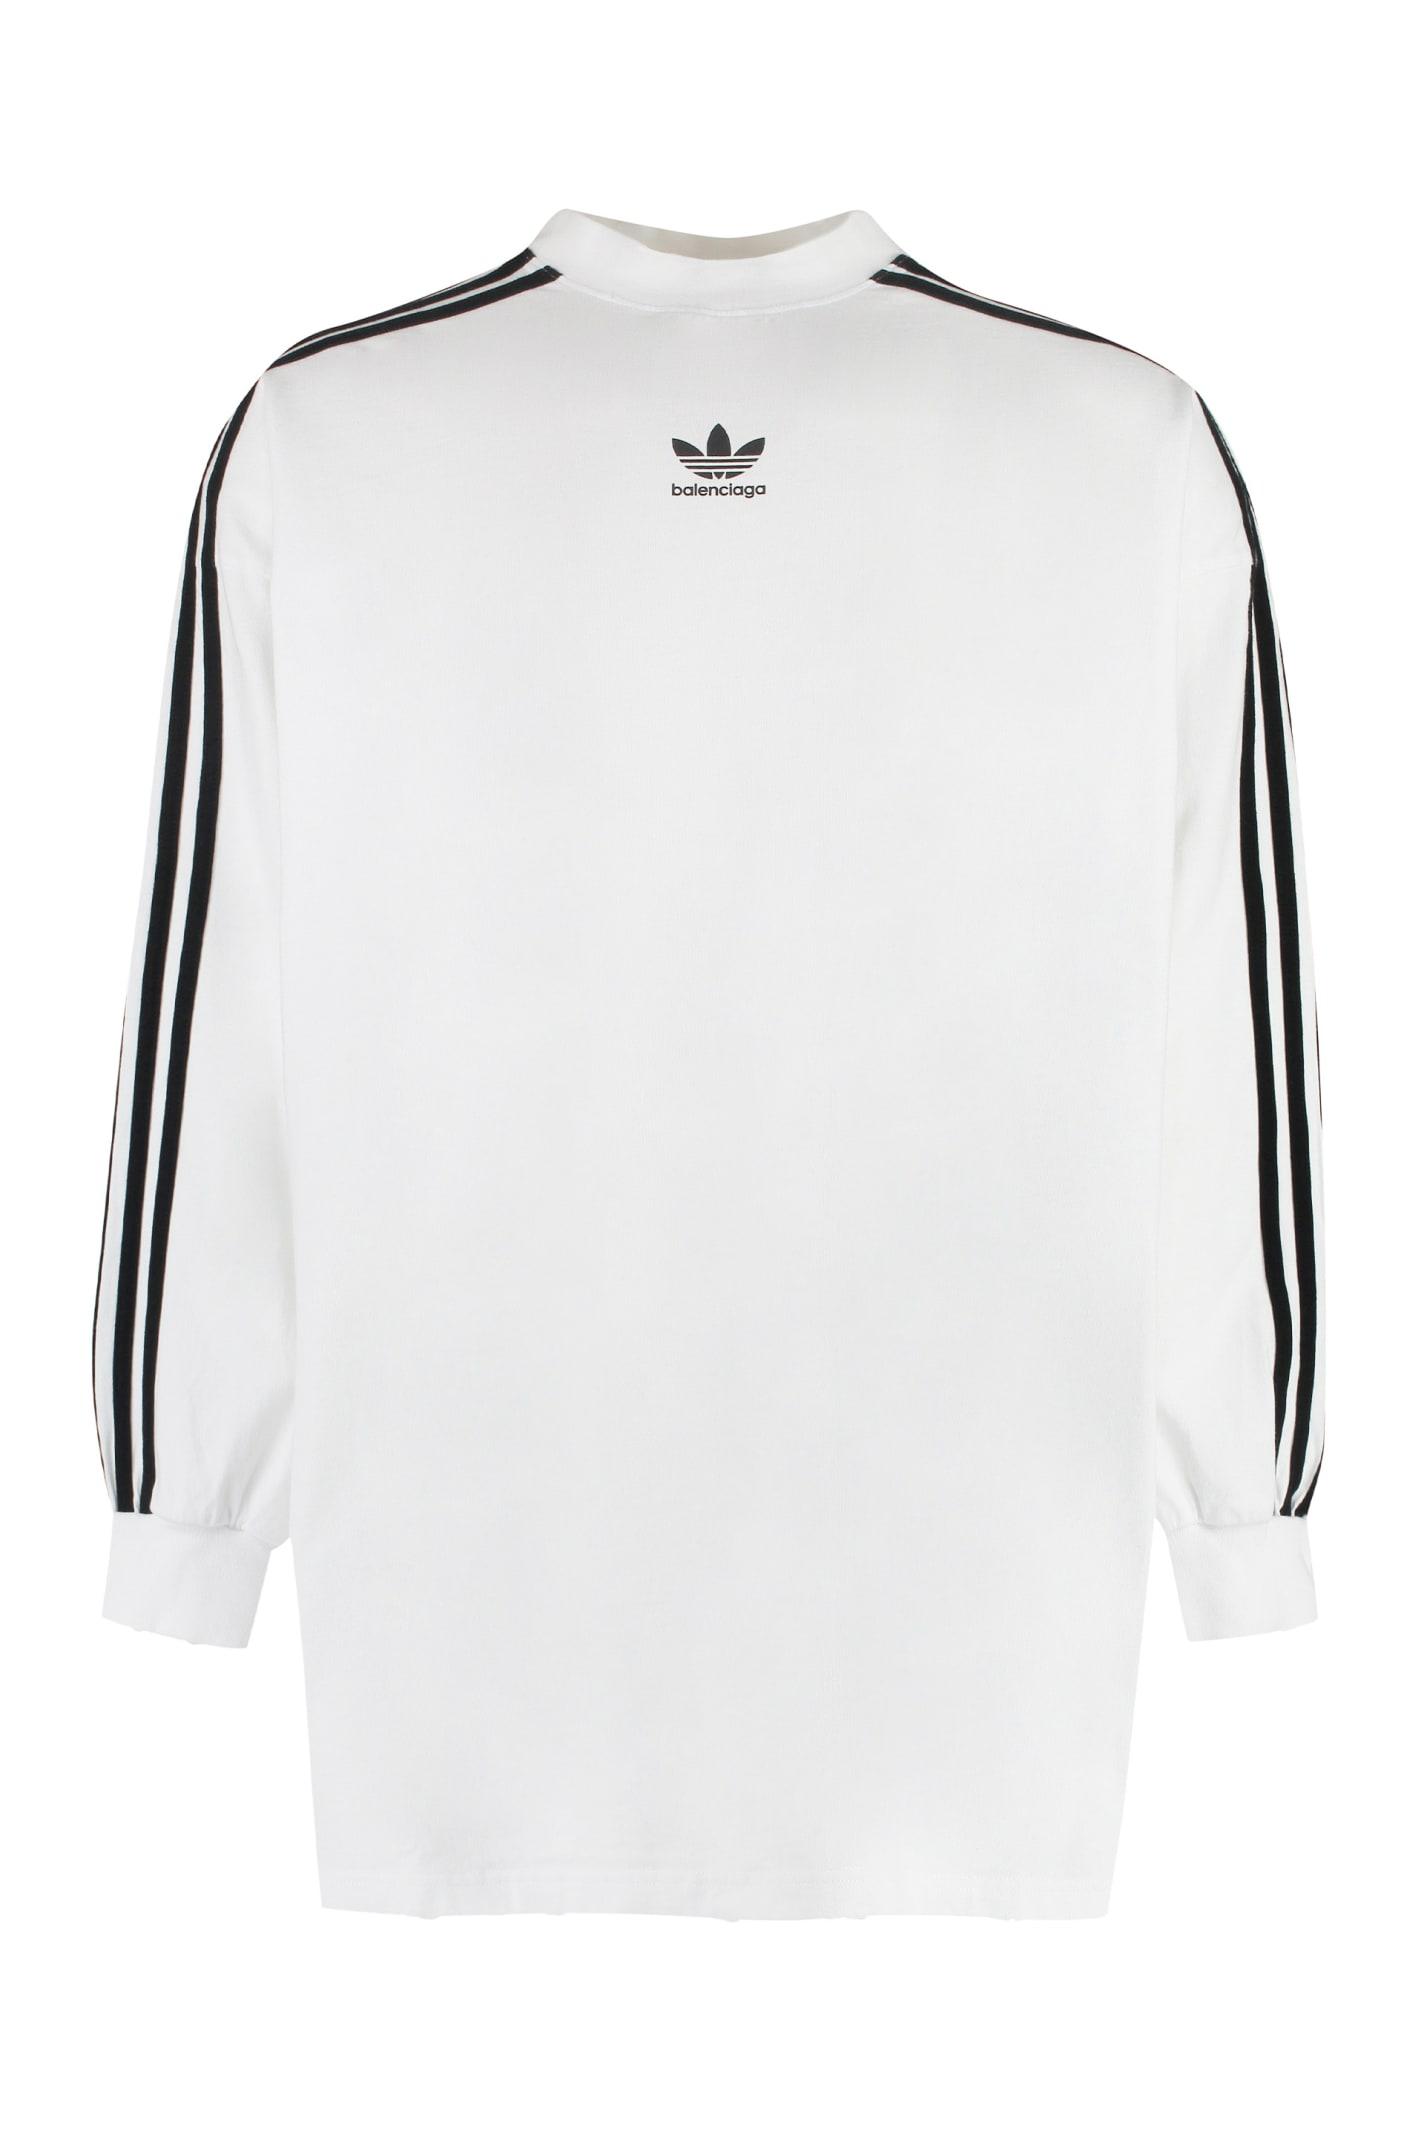 Balenciaga X Adidas - Long Sleeve Cotton T-shirt in White for Men | Lyst